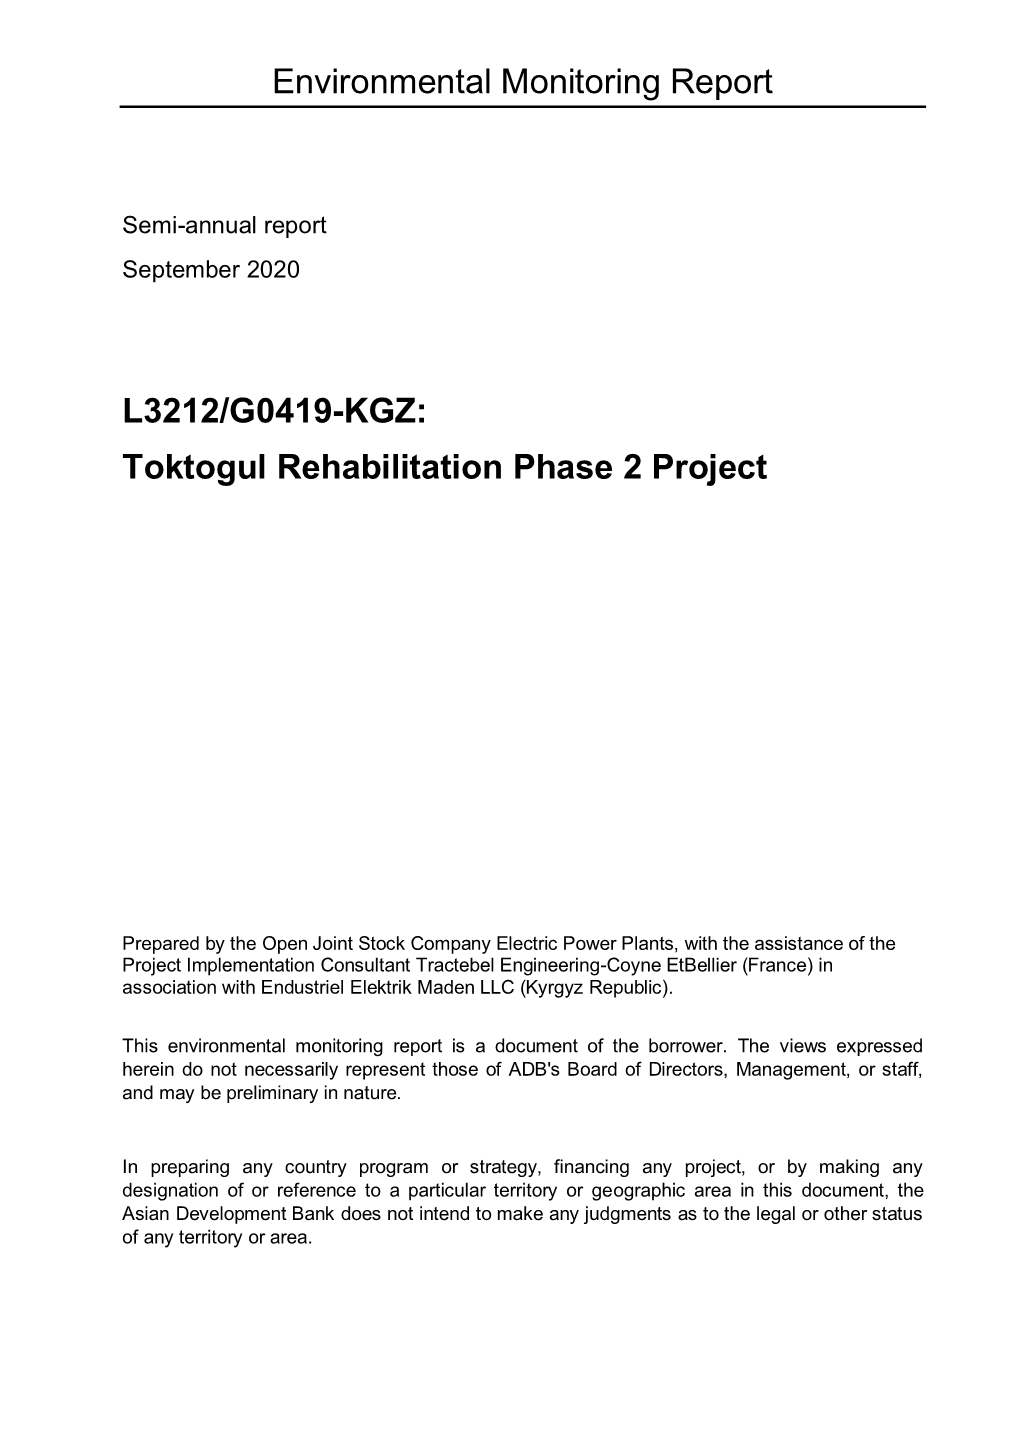 Toktogul Rehabilitation Phase 2 Project: Environmental Monitoring Report